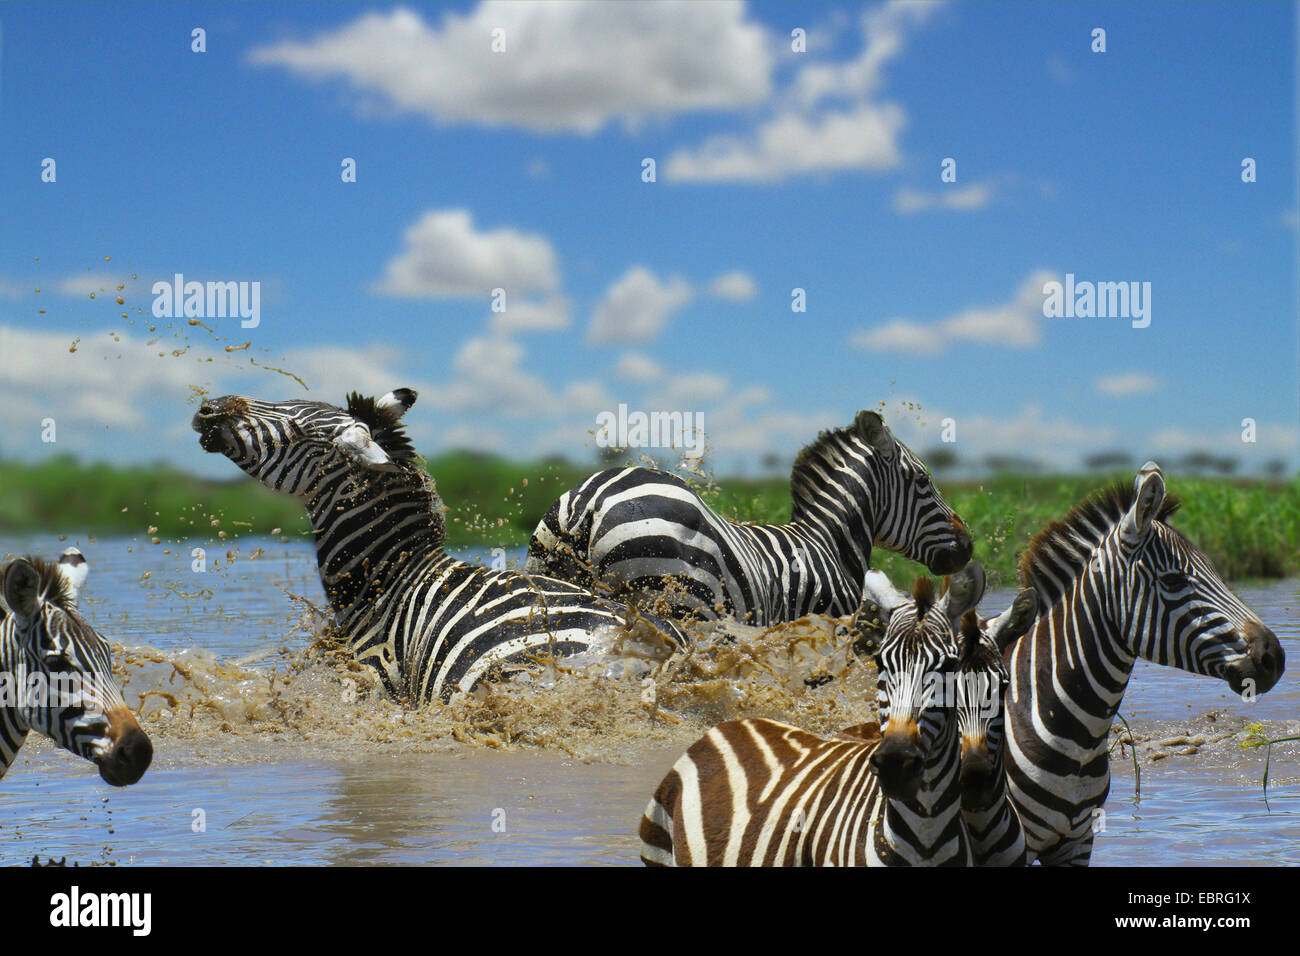 Common Zebra (Equus quagga), herd in water, fight, Tanzania, Serengeti National Park Stock Photo